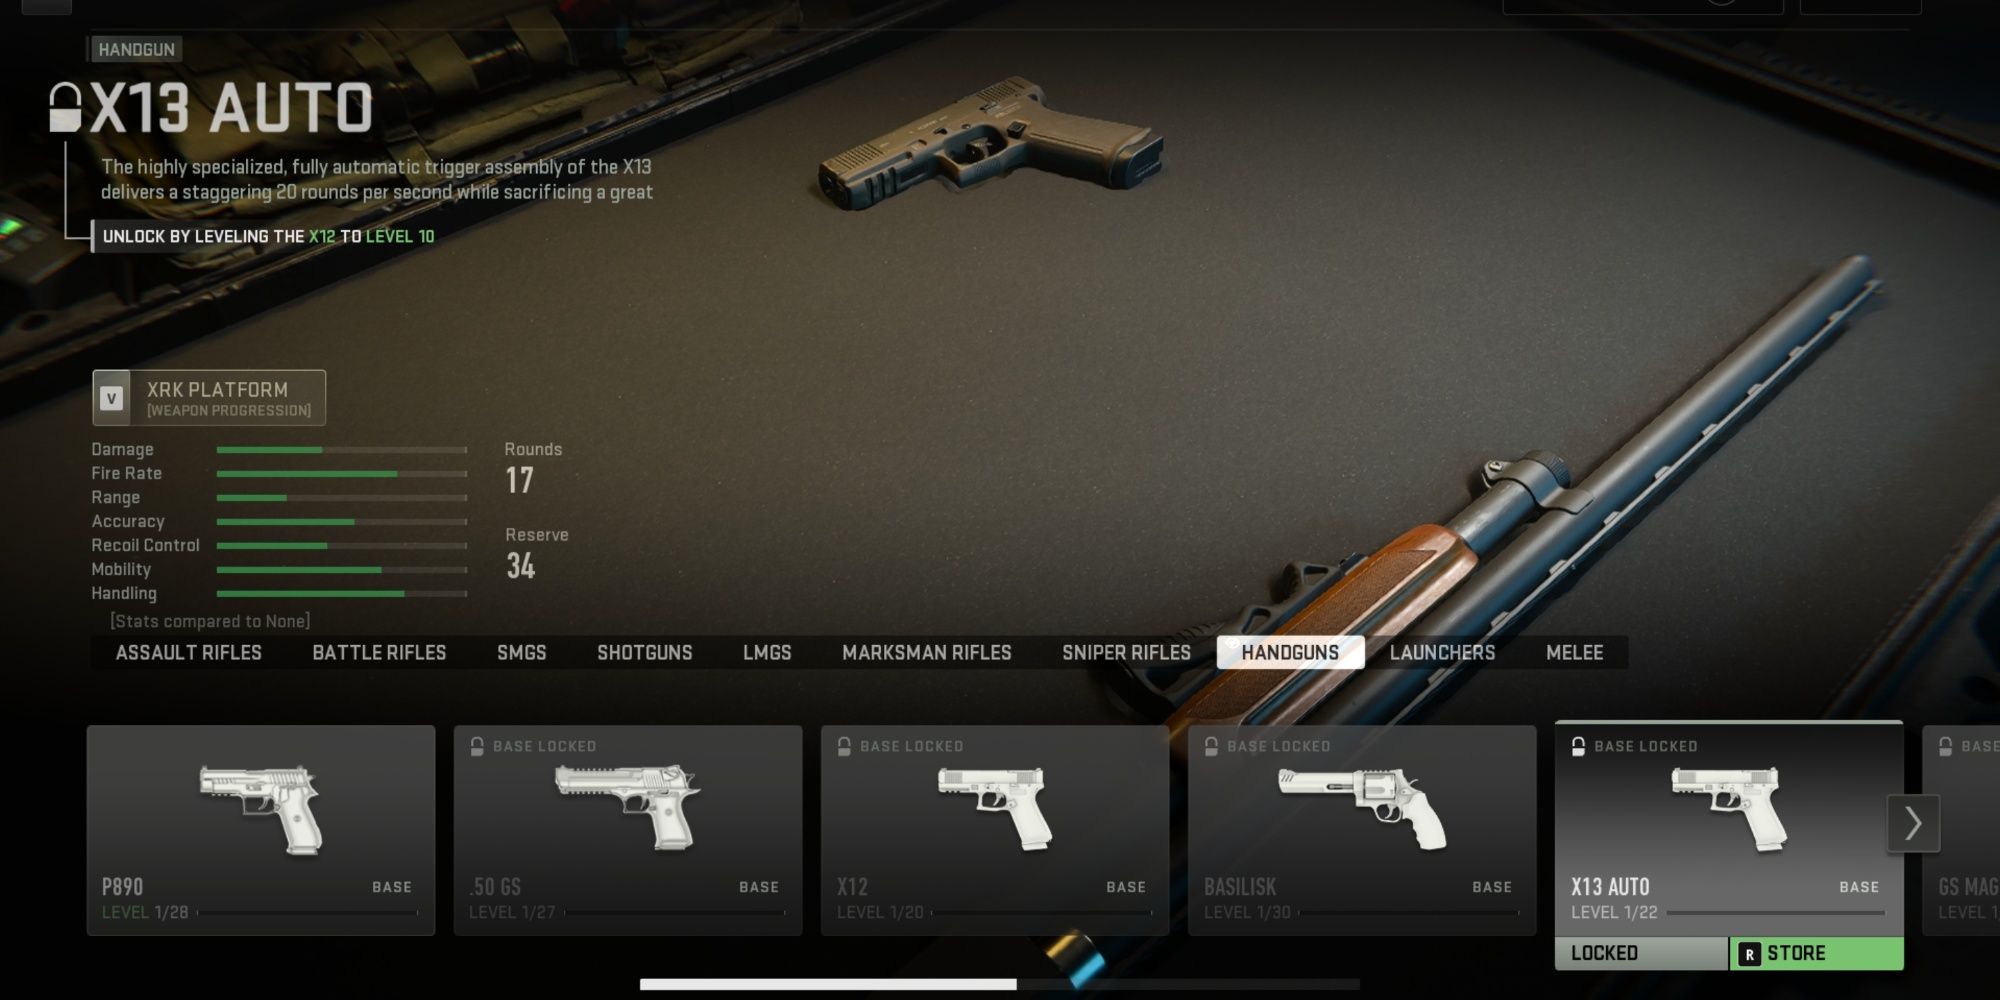 X13 Auto Handgun Call of Duty Warzone Mobile Ranked